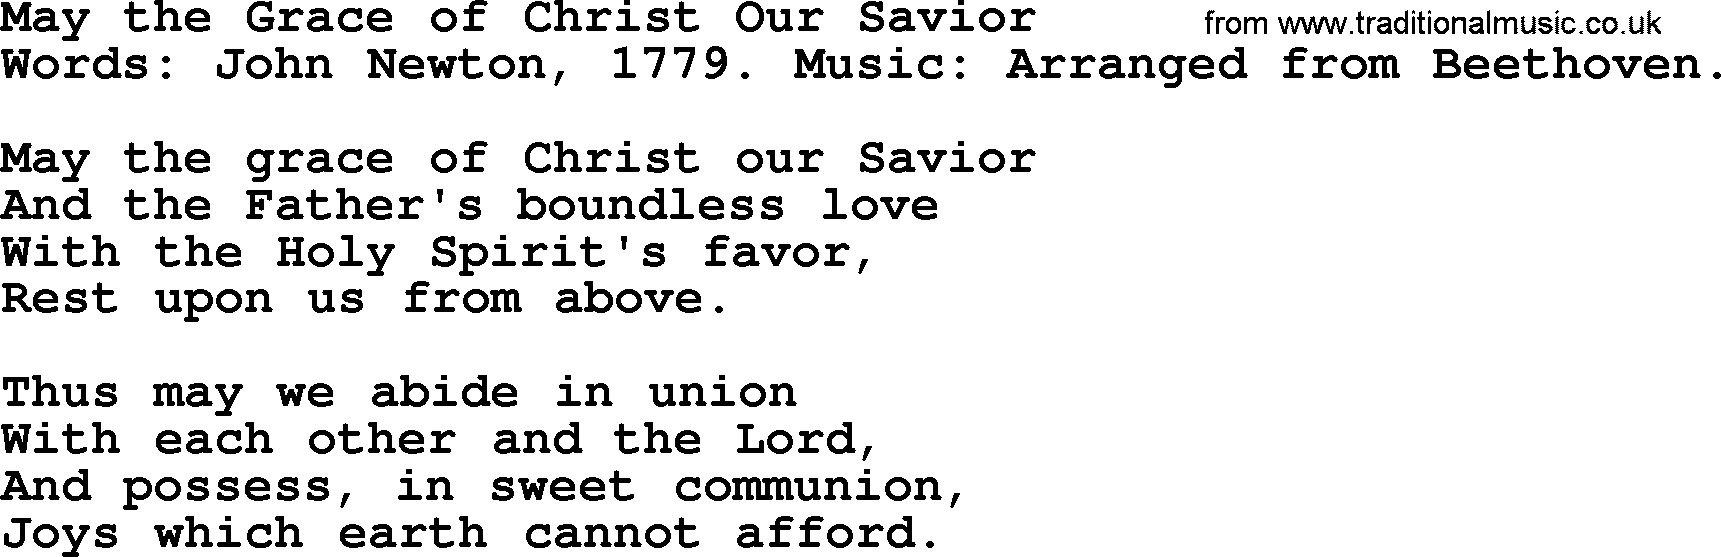 John Newton hymn: May The Grace Of Christ Our Savior, lyrics